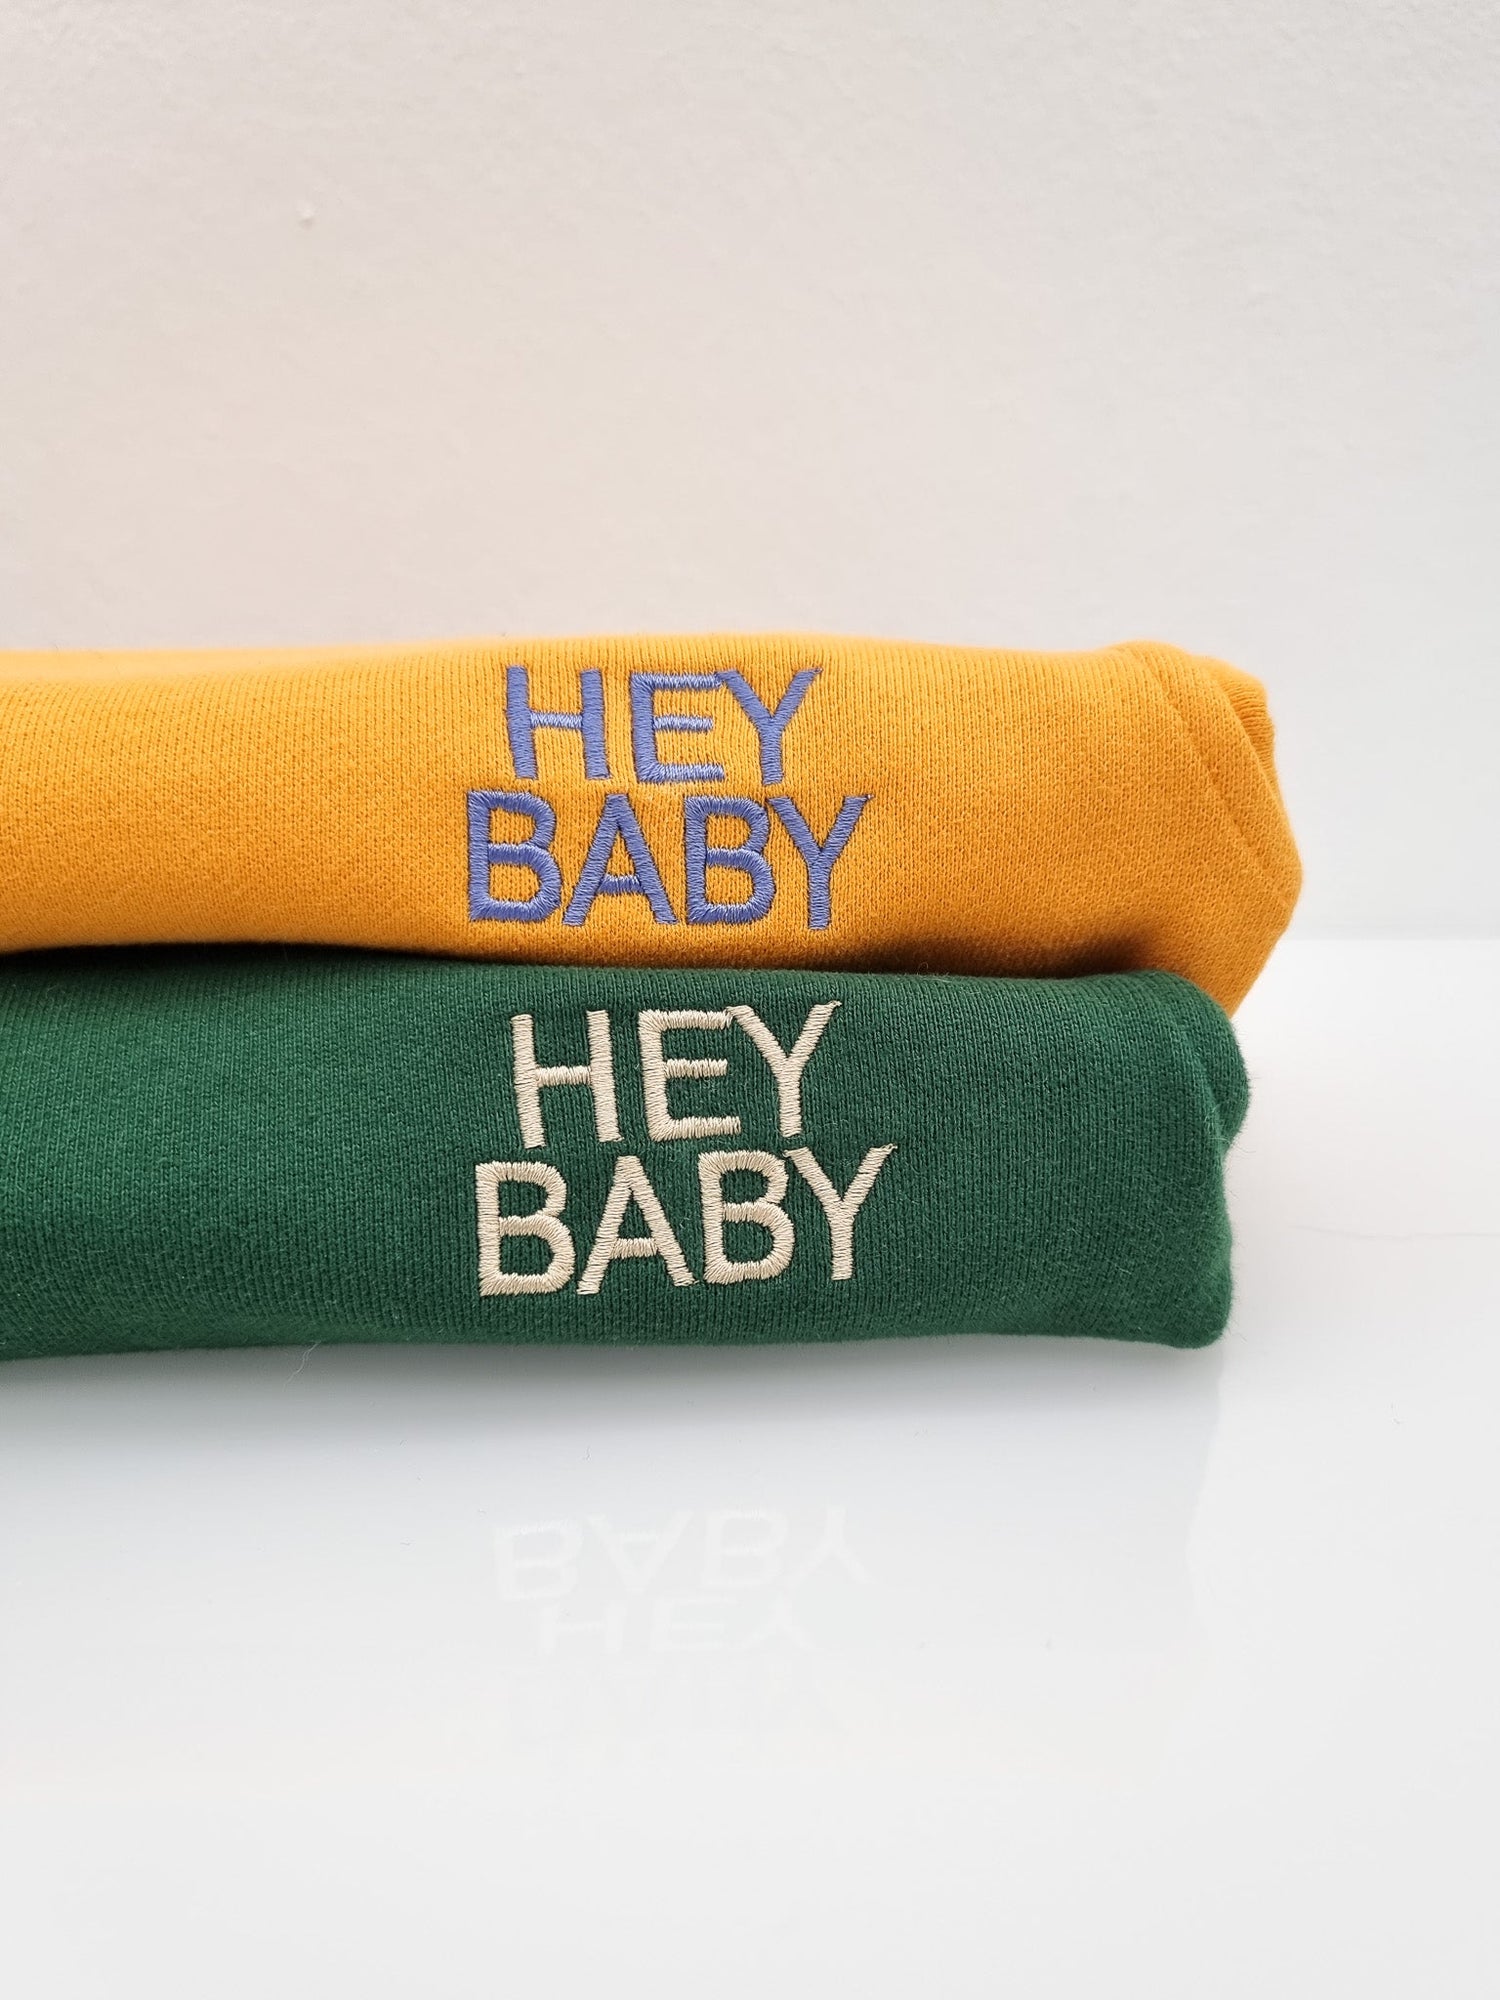 Sweatshirt HEY BABY 'Warmorange' - The Little One • Family.Concept.Store. 